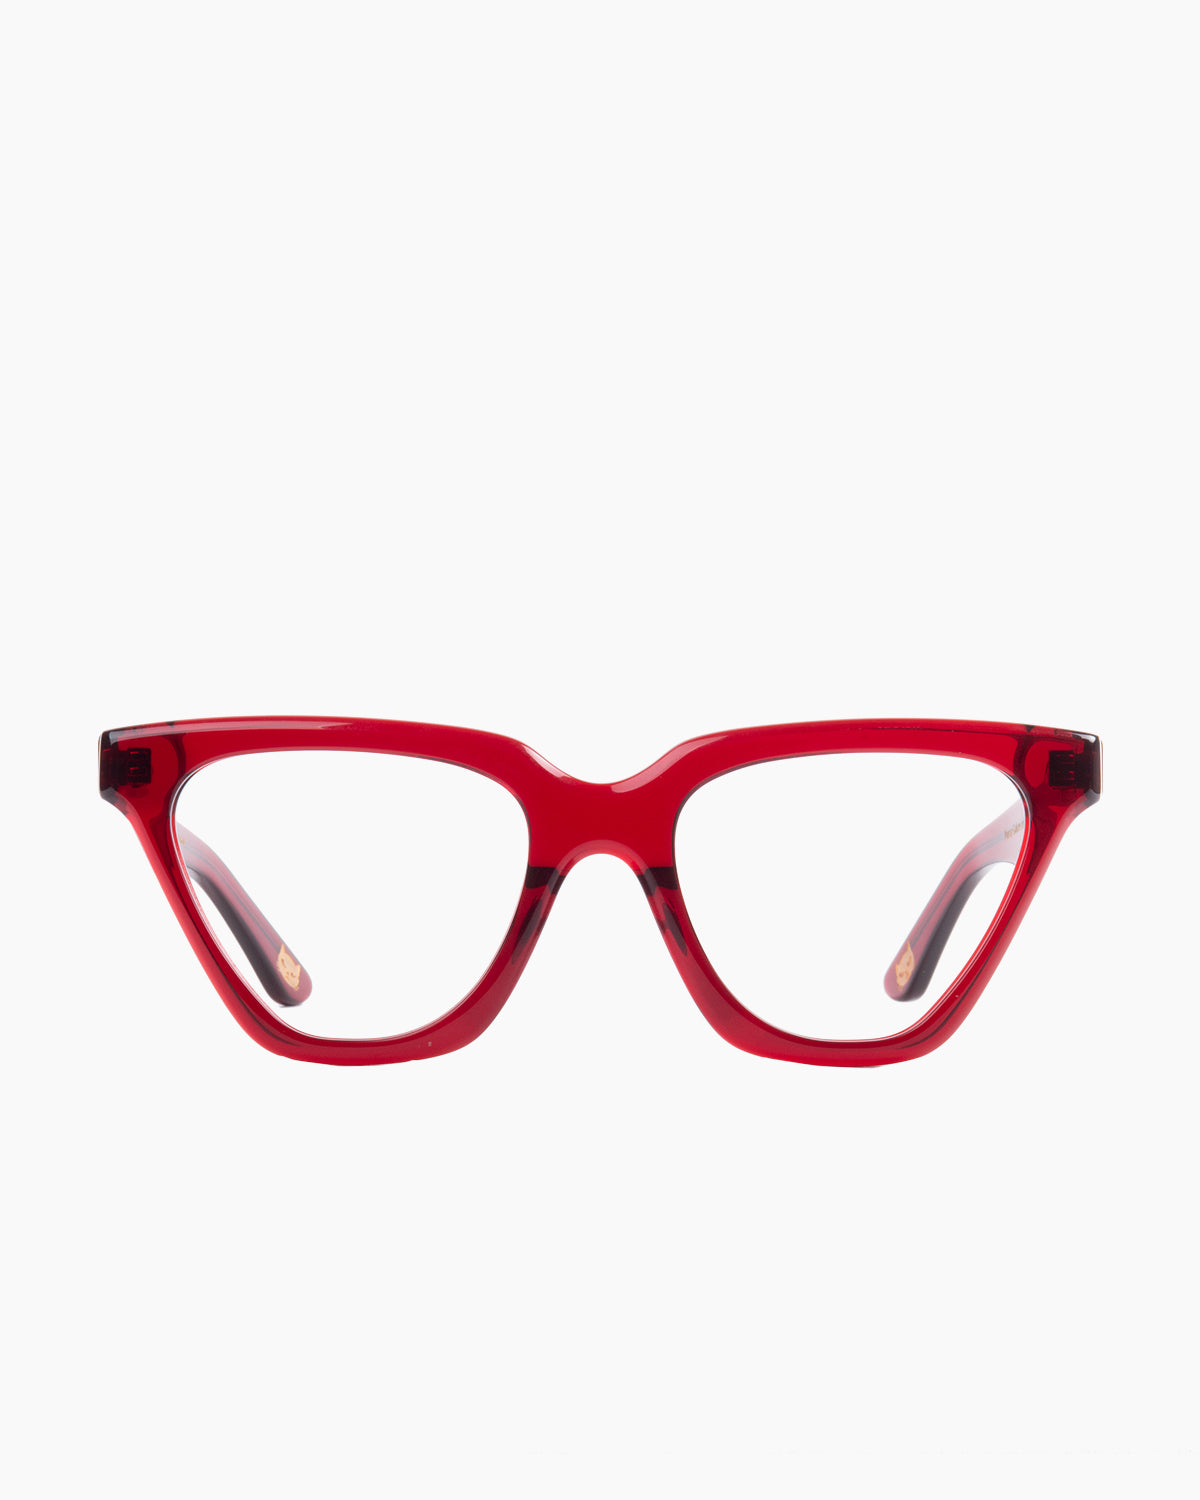 Spectacleeyeworks - Joelle - c730 | glasses bar